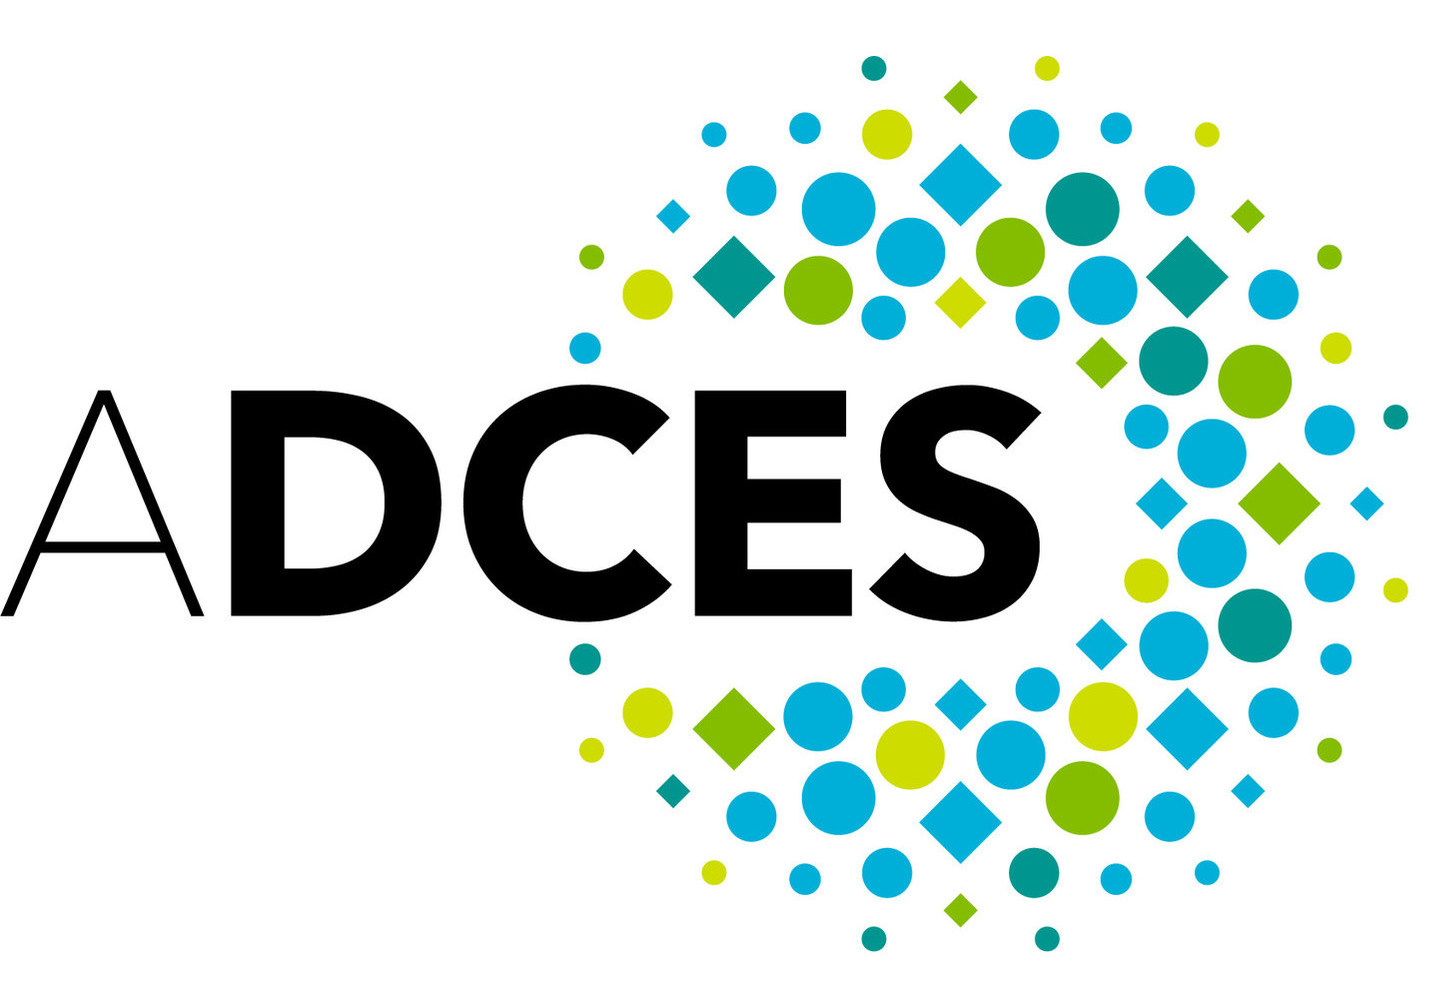 Association of Diabetes Care & Education Specialists logo